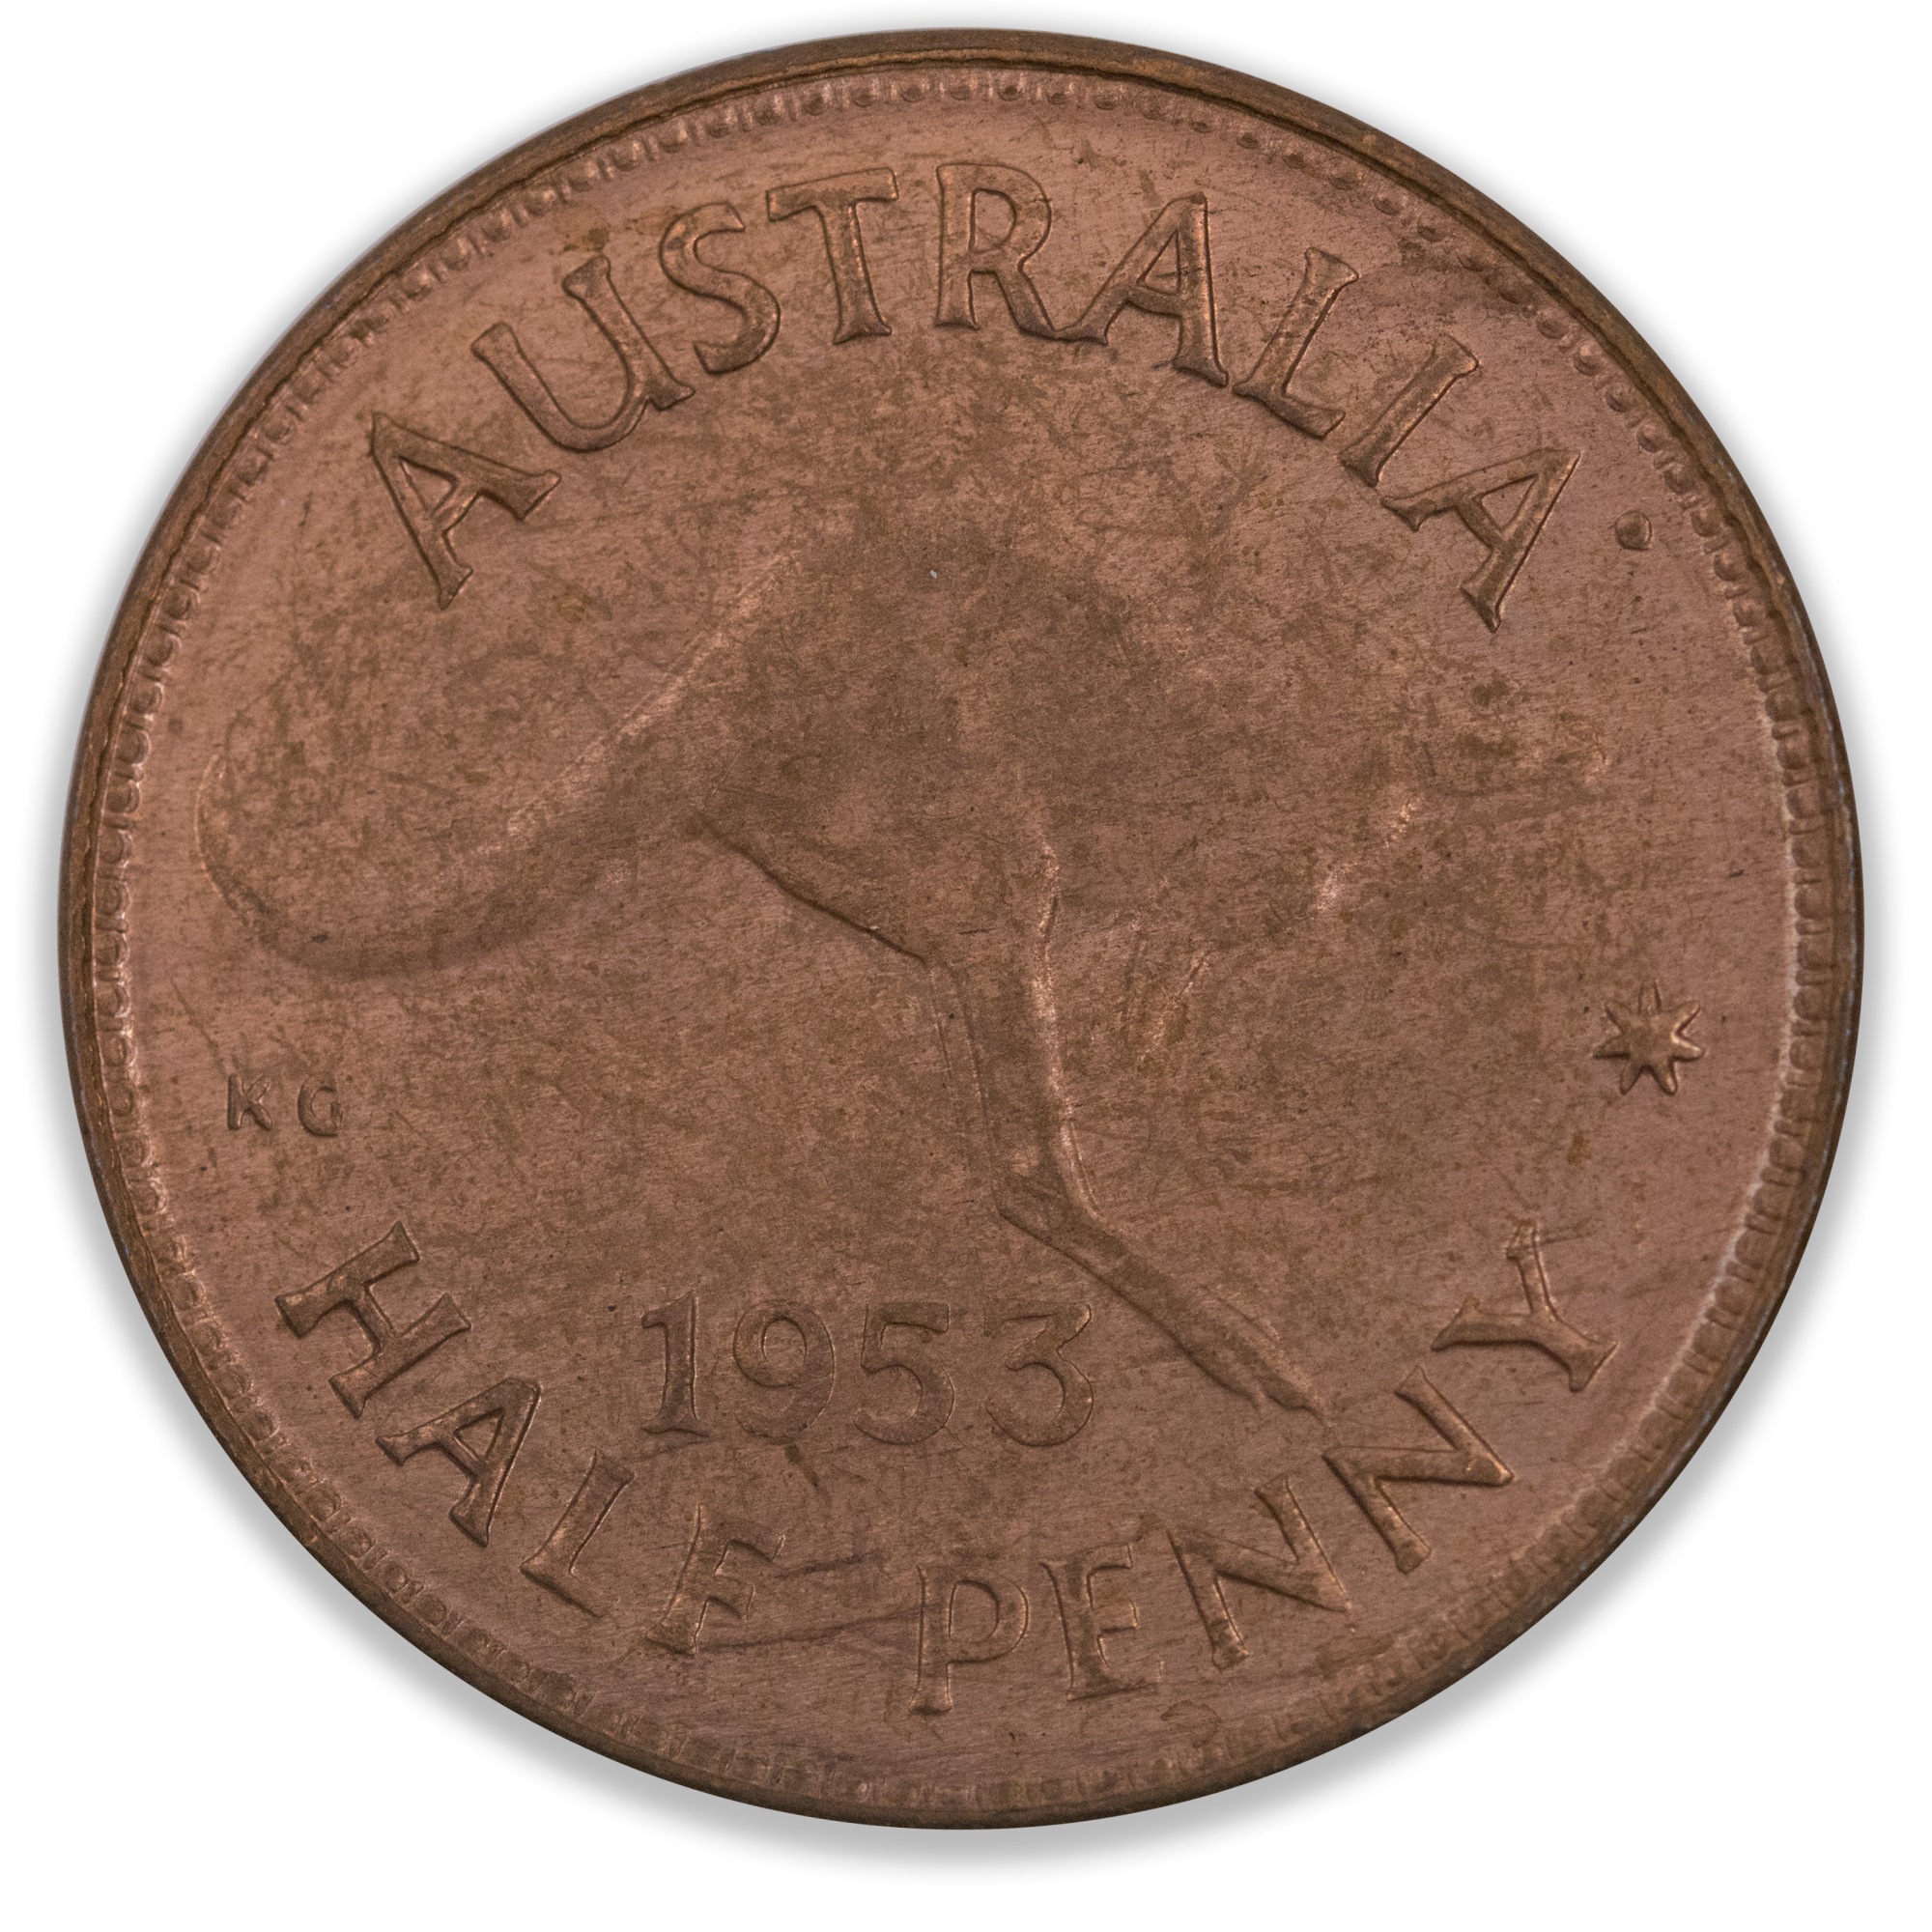 1953 Australian Half Penny Uncirculated